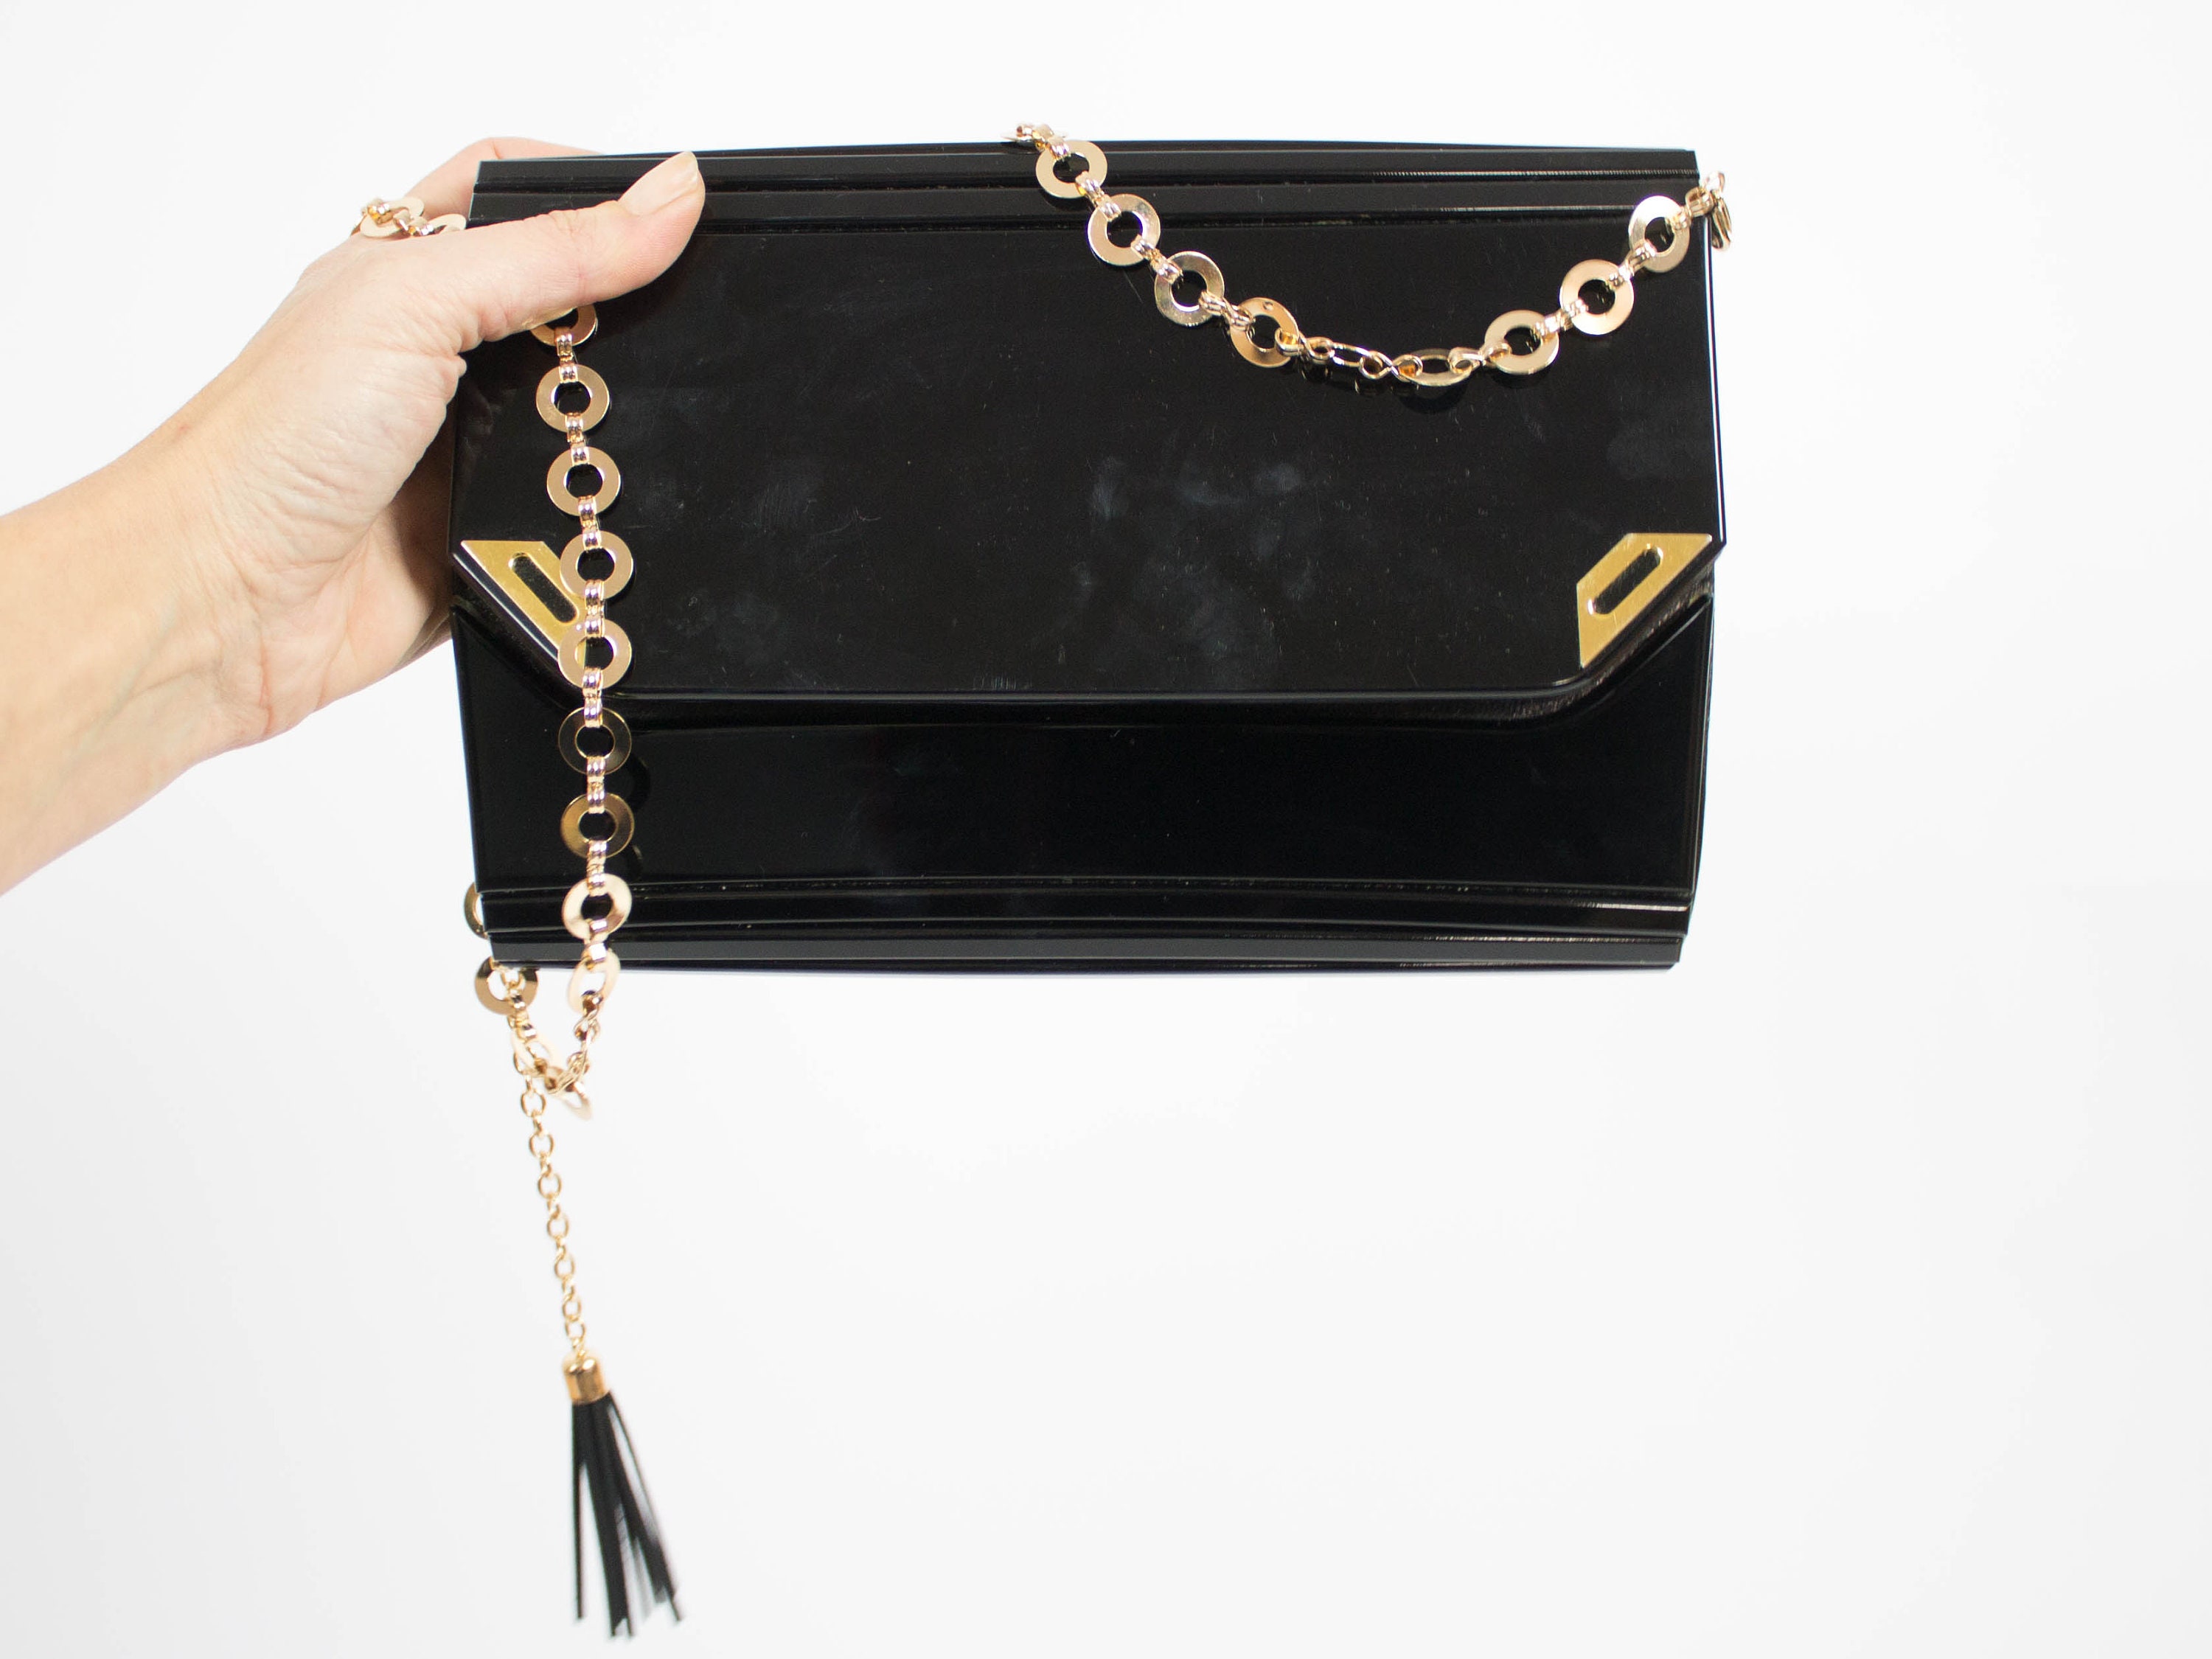 Lucite Handbag, 60s Clutch, Evening Bag, Chain Strap, 1960s Fashion, Black Gold, Vintage Purse, Small Evening Bag